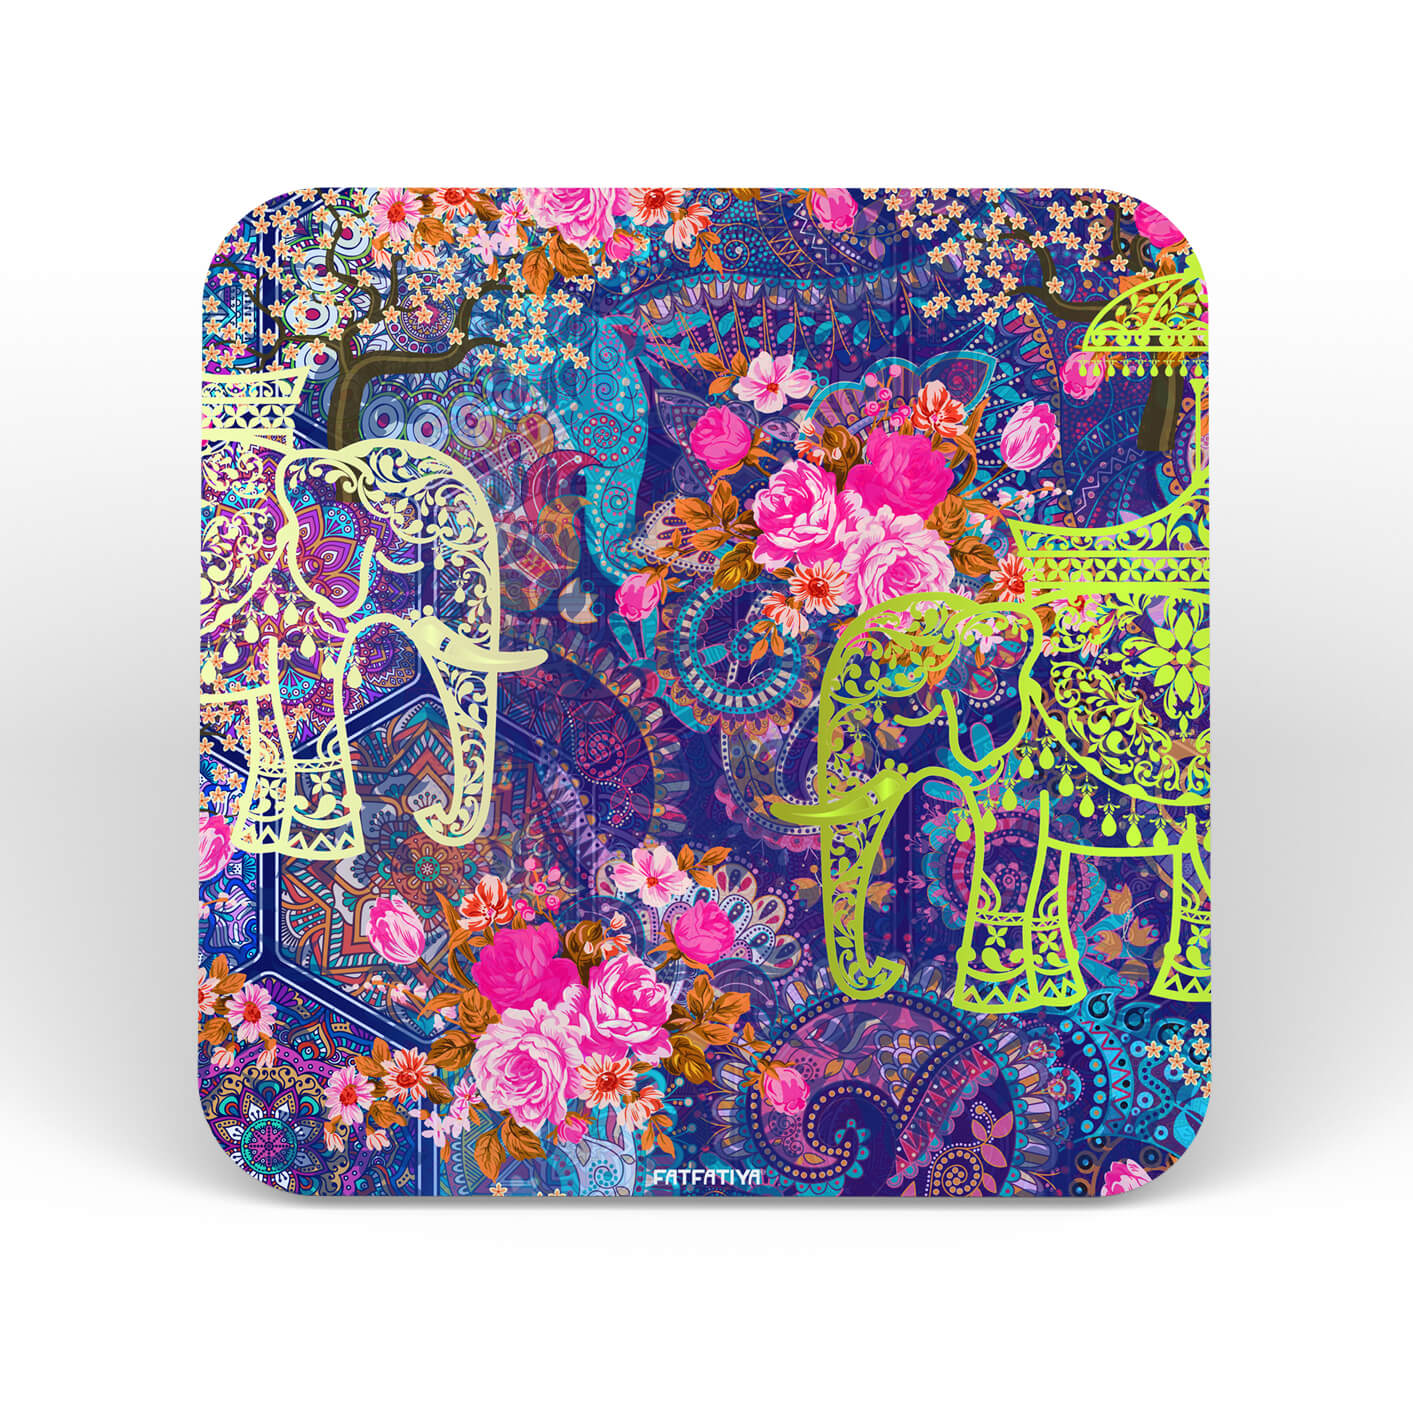 Two Decorated Elephant Designer Printed Coasters Set